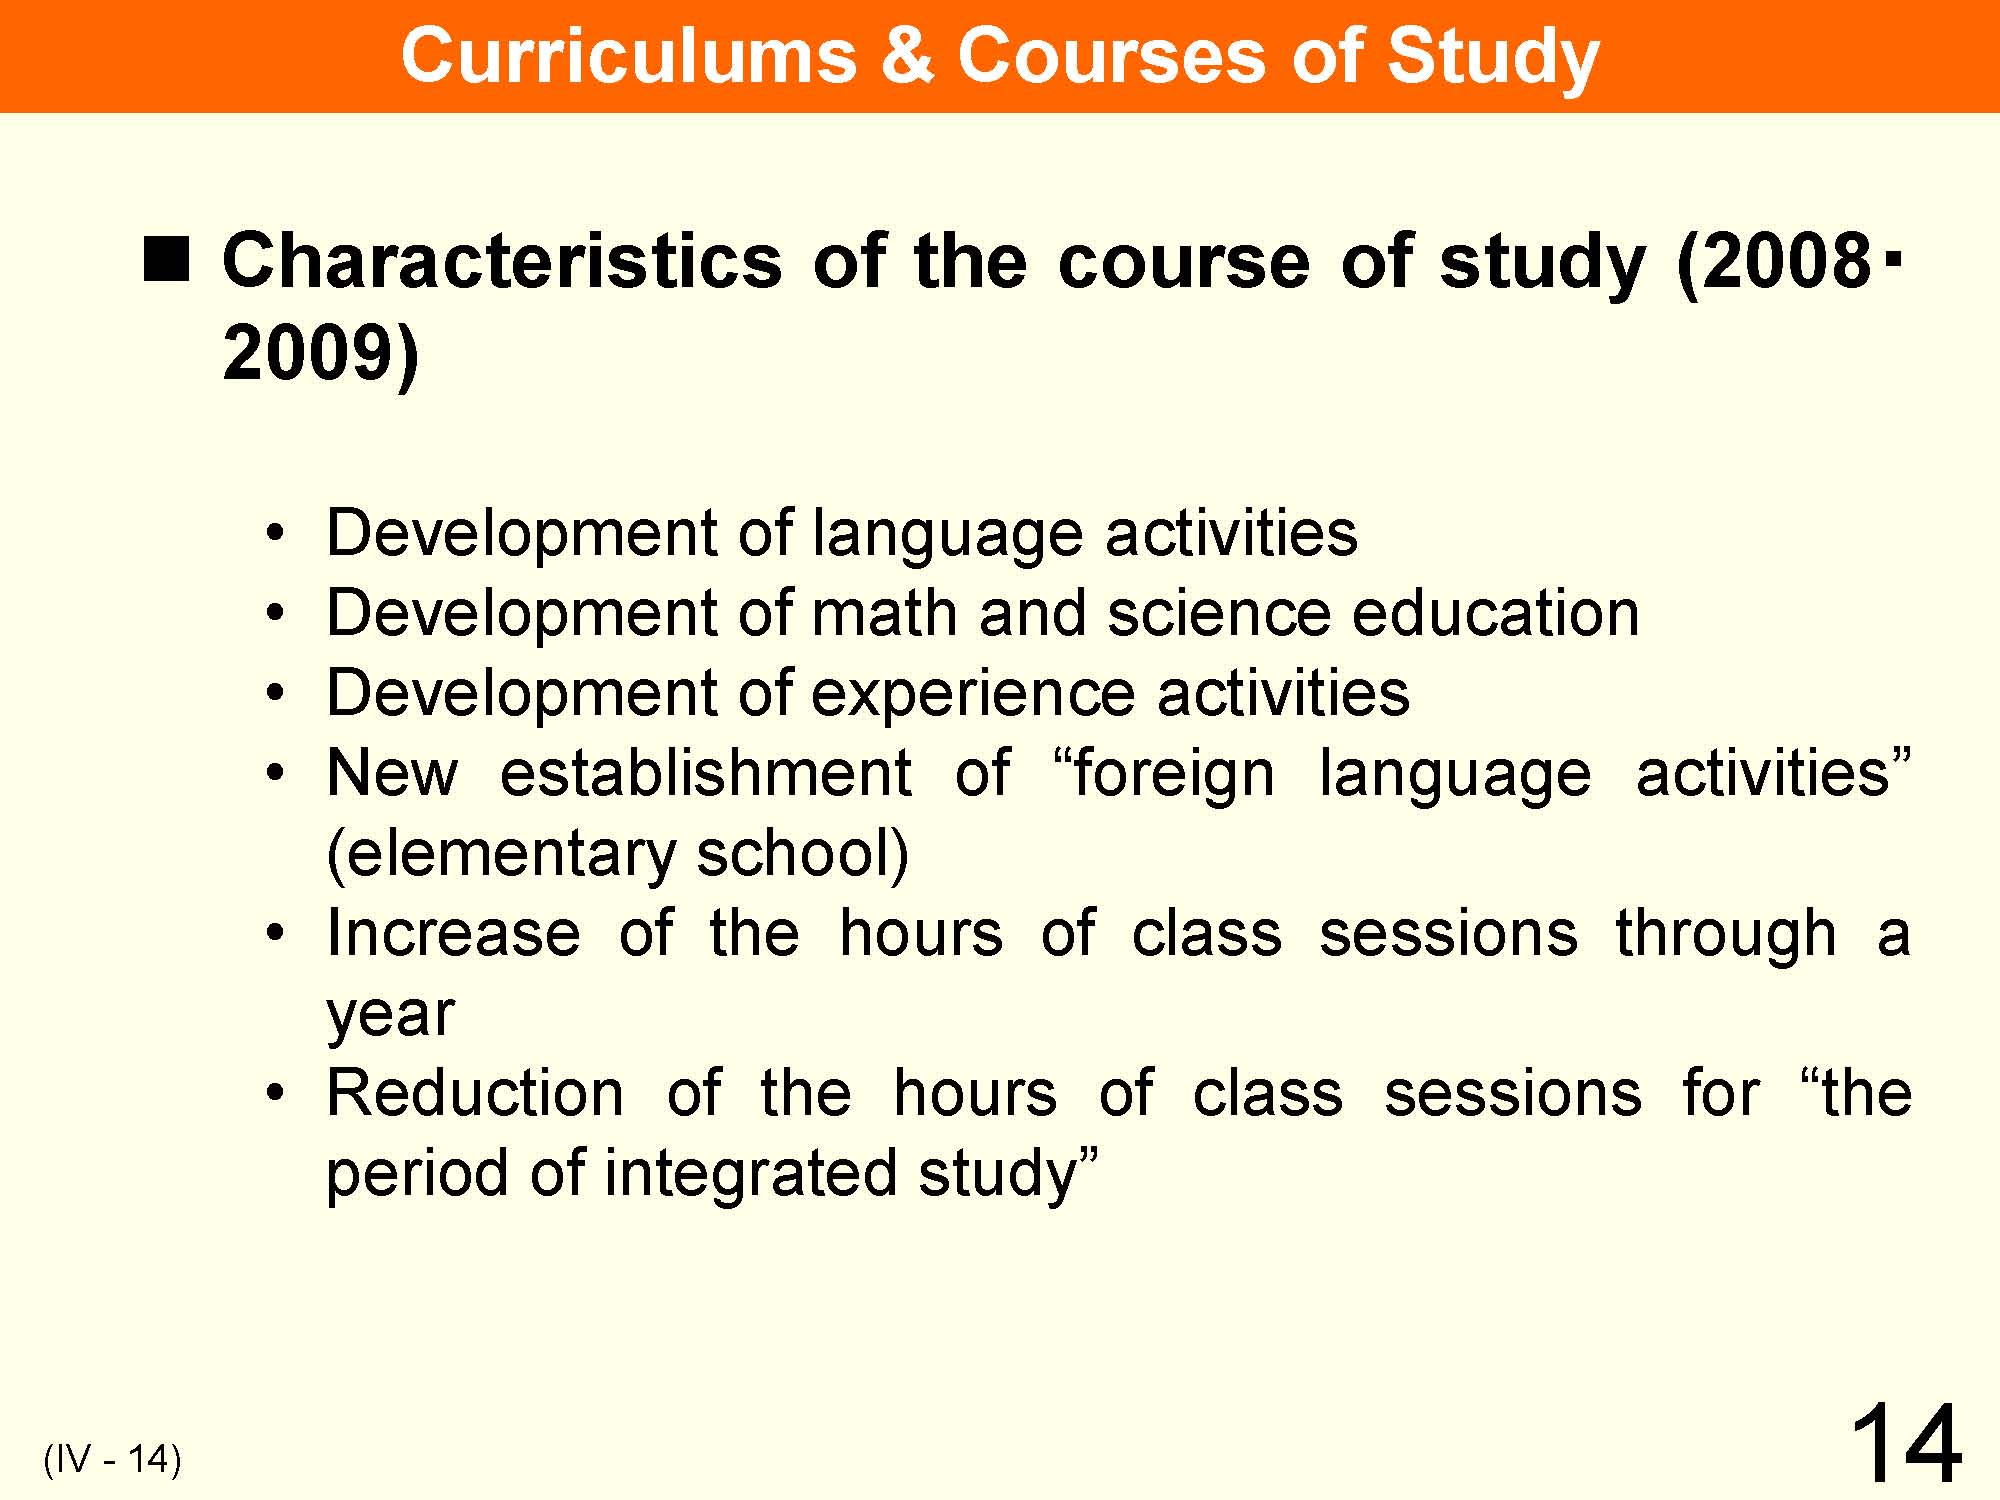 IV Organization & Implementation Curriculum